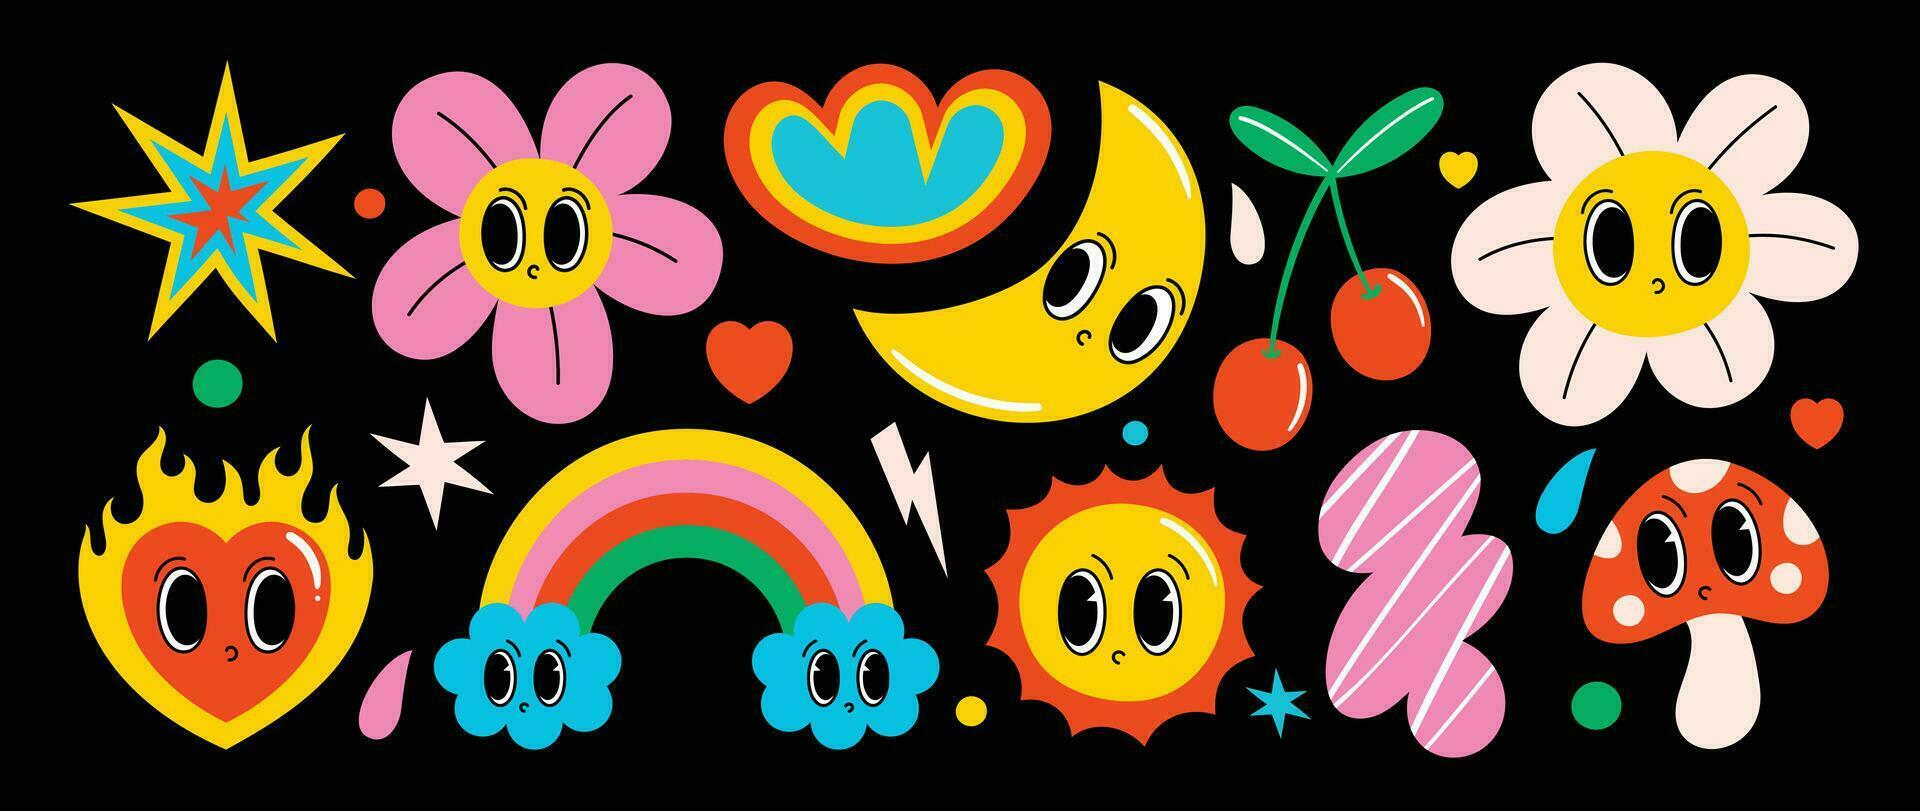 conjunto de miedoso maravilloso elemento vector. colección de dibujos animados caracteres, garabatear sonrisa rostro, flor, corazón, sol, arcoíris, luna, seta. linda retro maravilloso hippie diseño para decorativo, pegatina, niños. vector